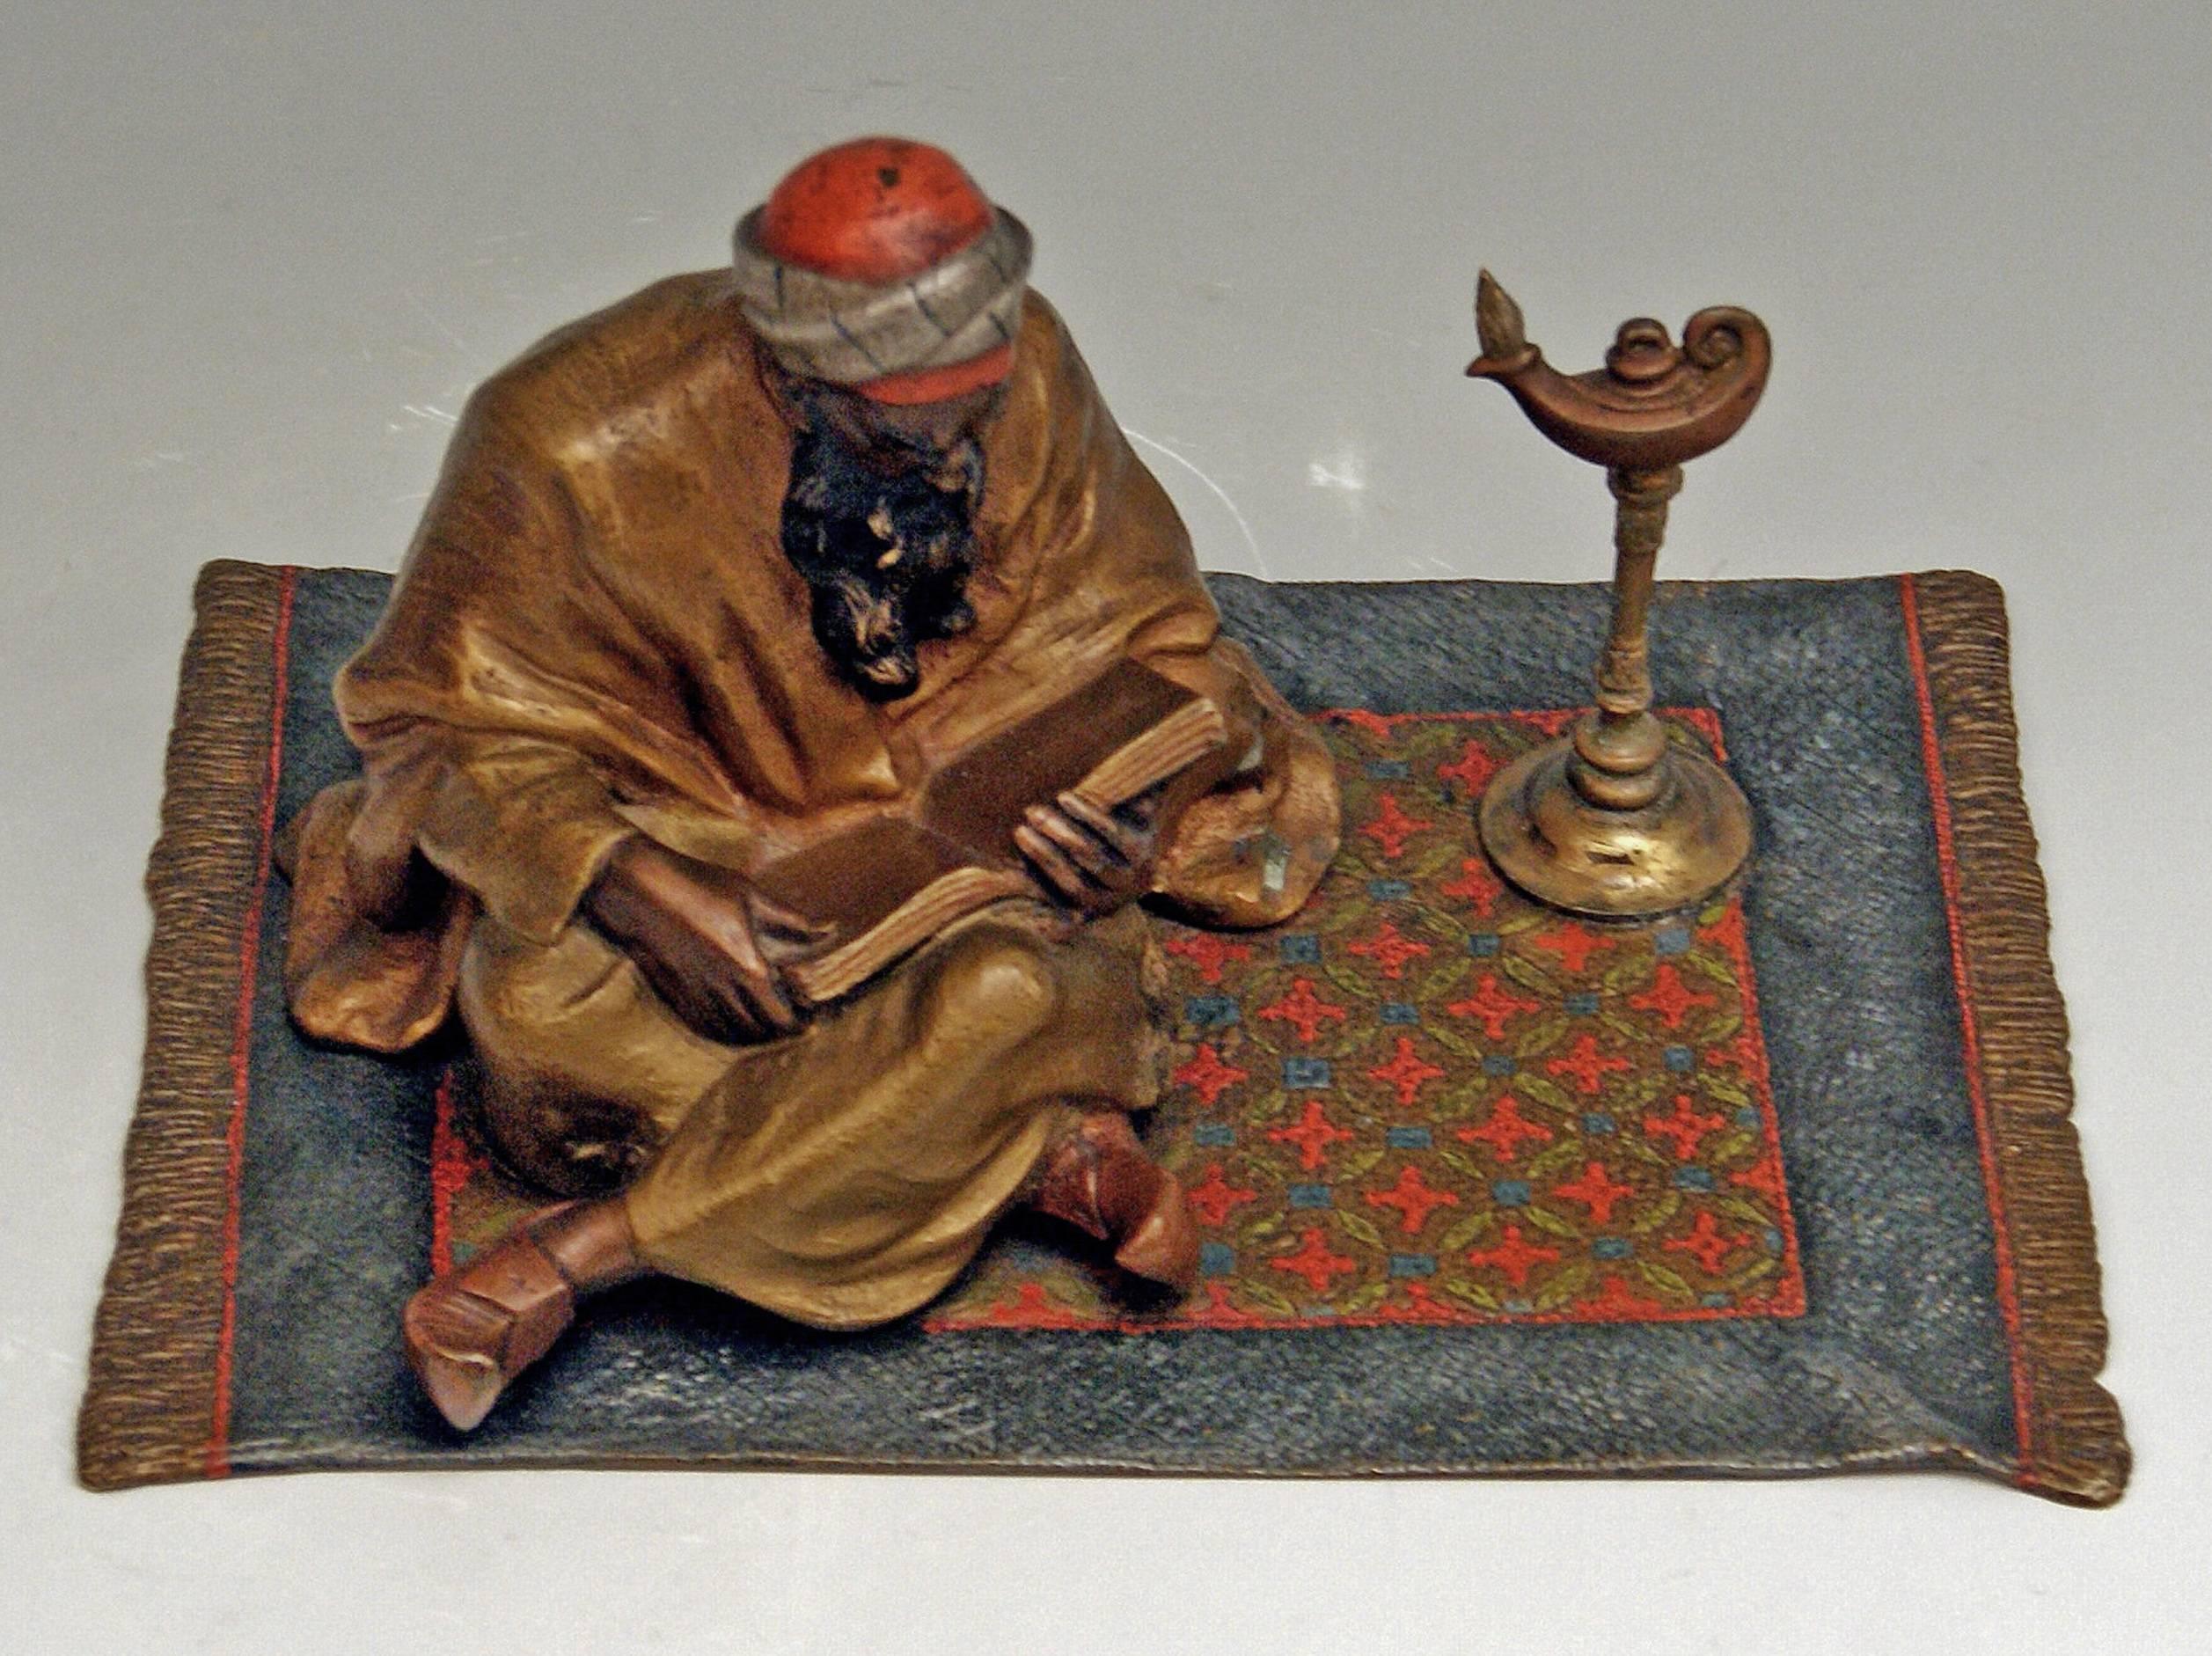 Cold-Painted Vienna Bergman'n' Bronze Arab Man on Carpet Reading Book Made, circa 1900